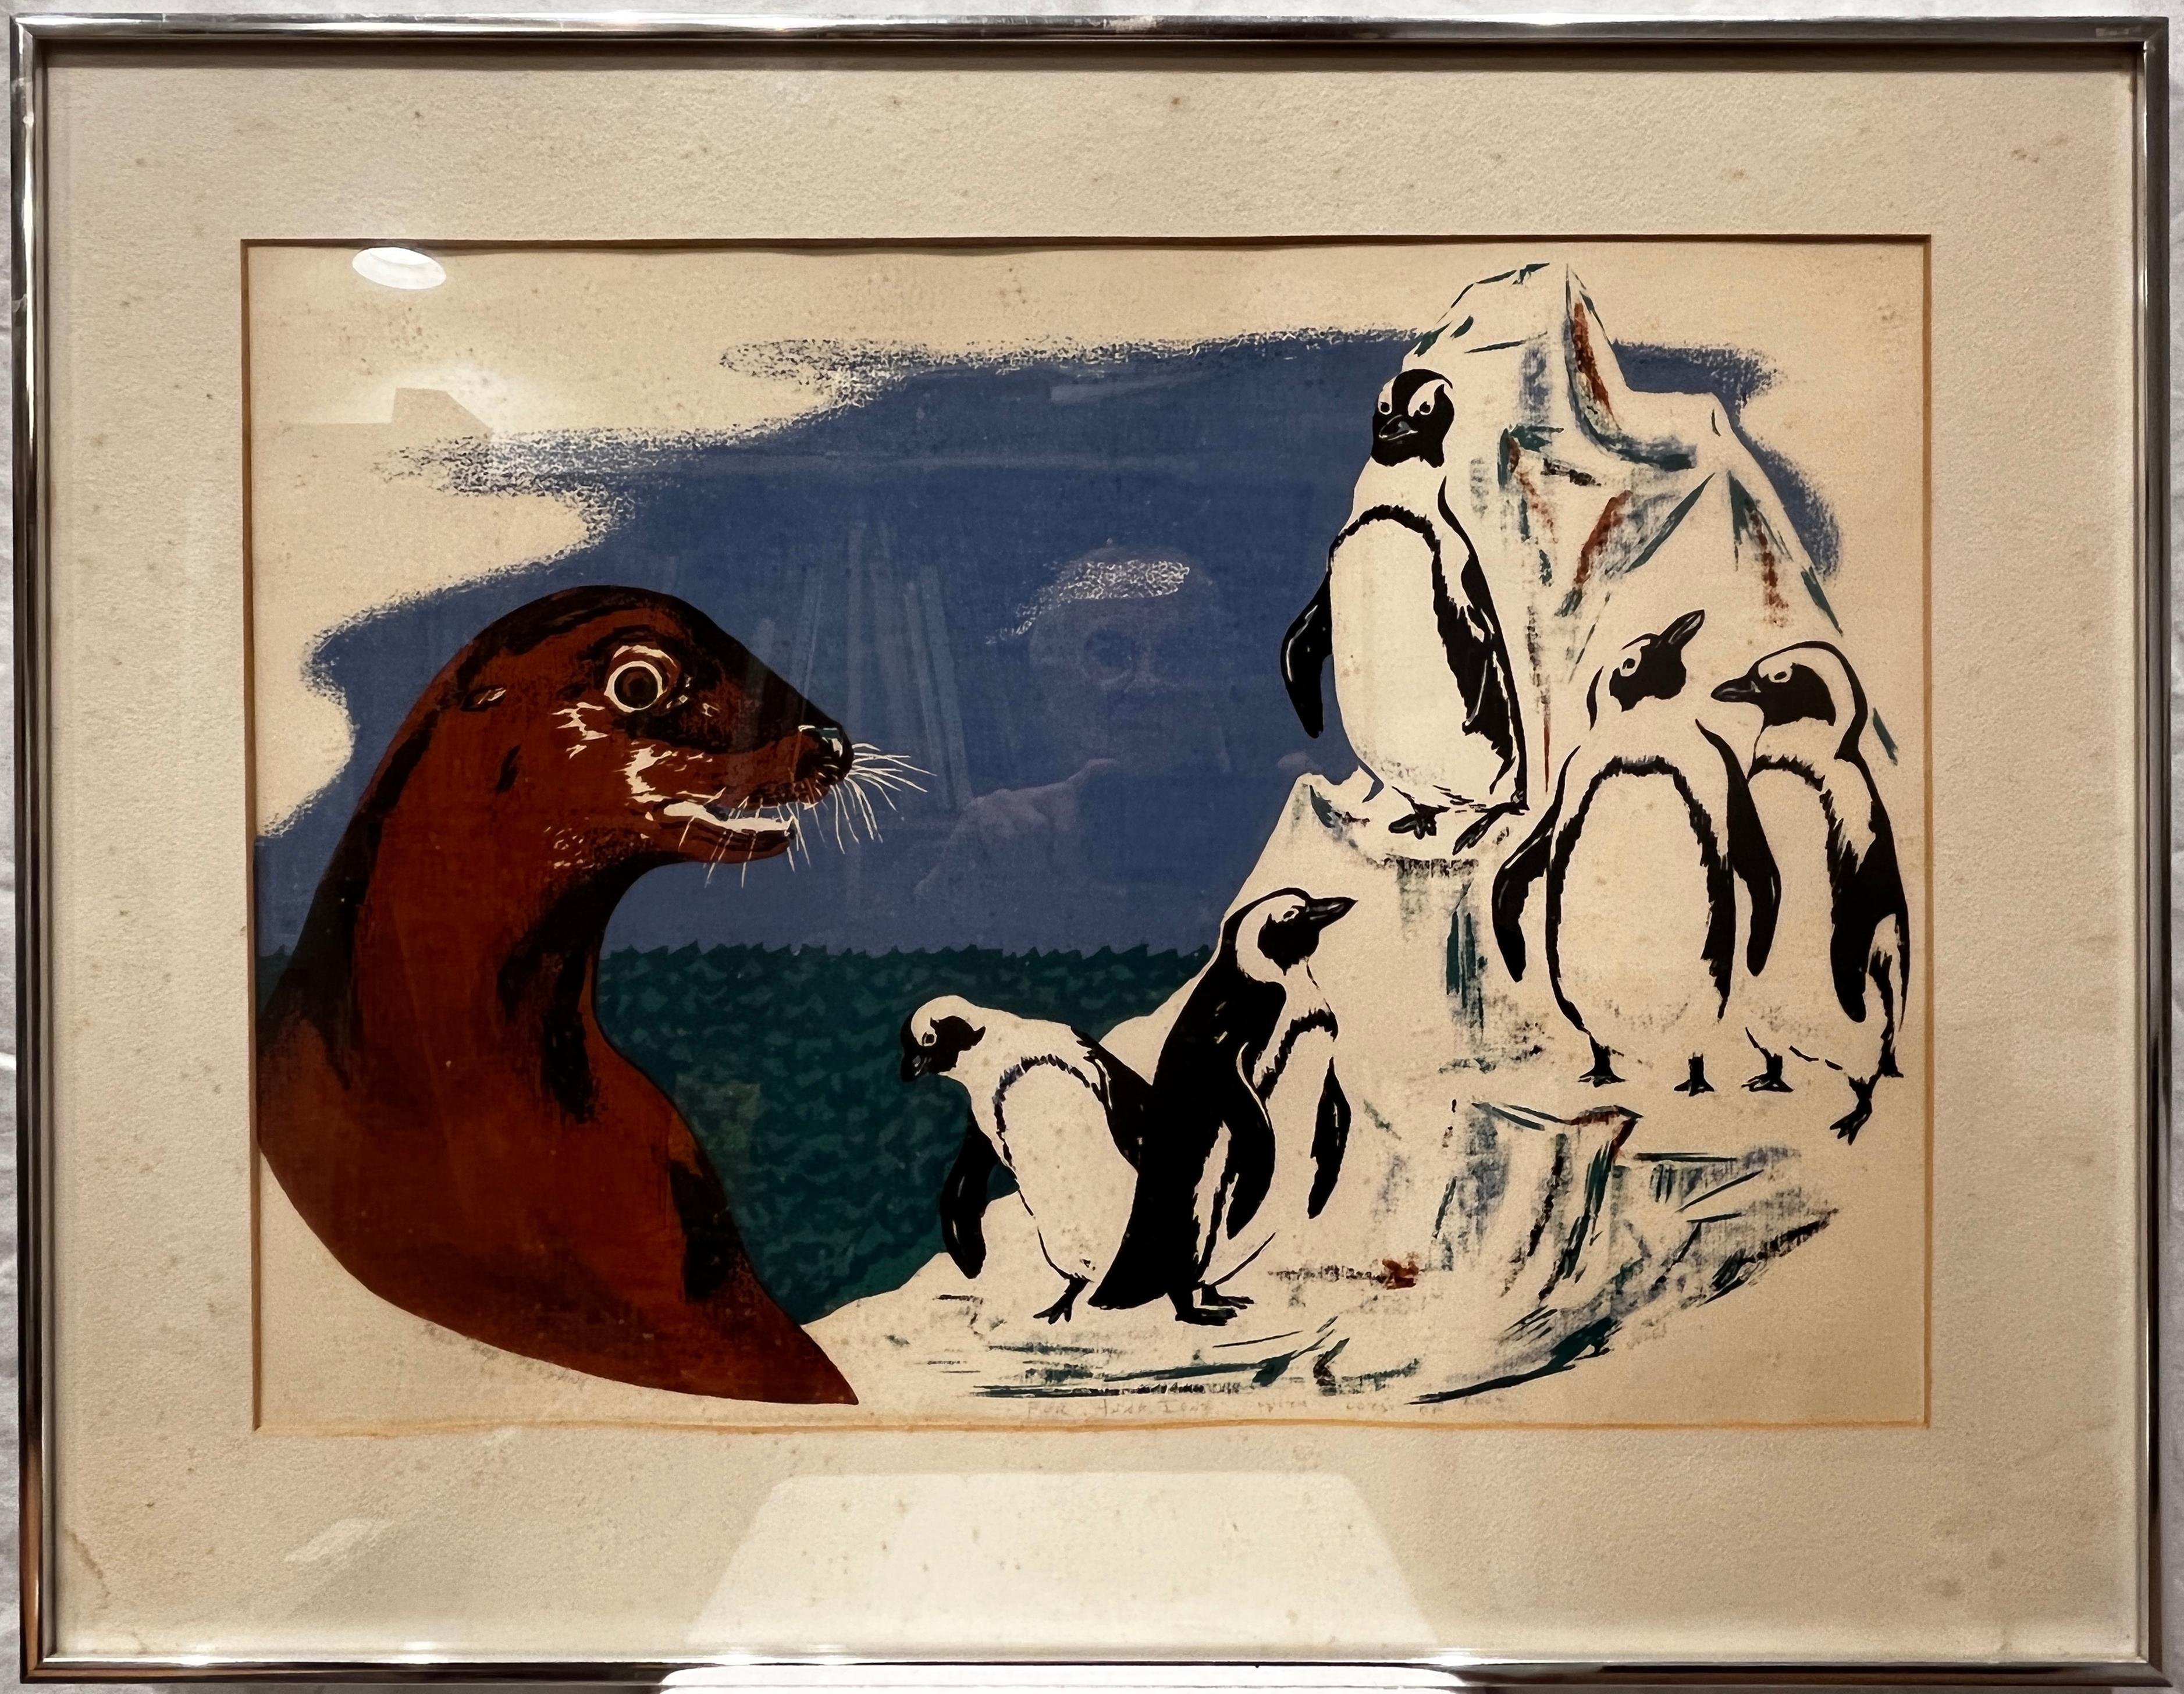 Sceau et pingouin - Print de Mervin Jules